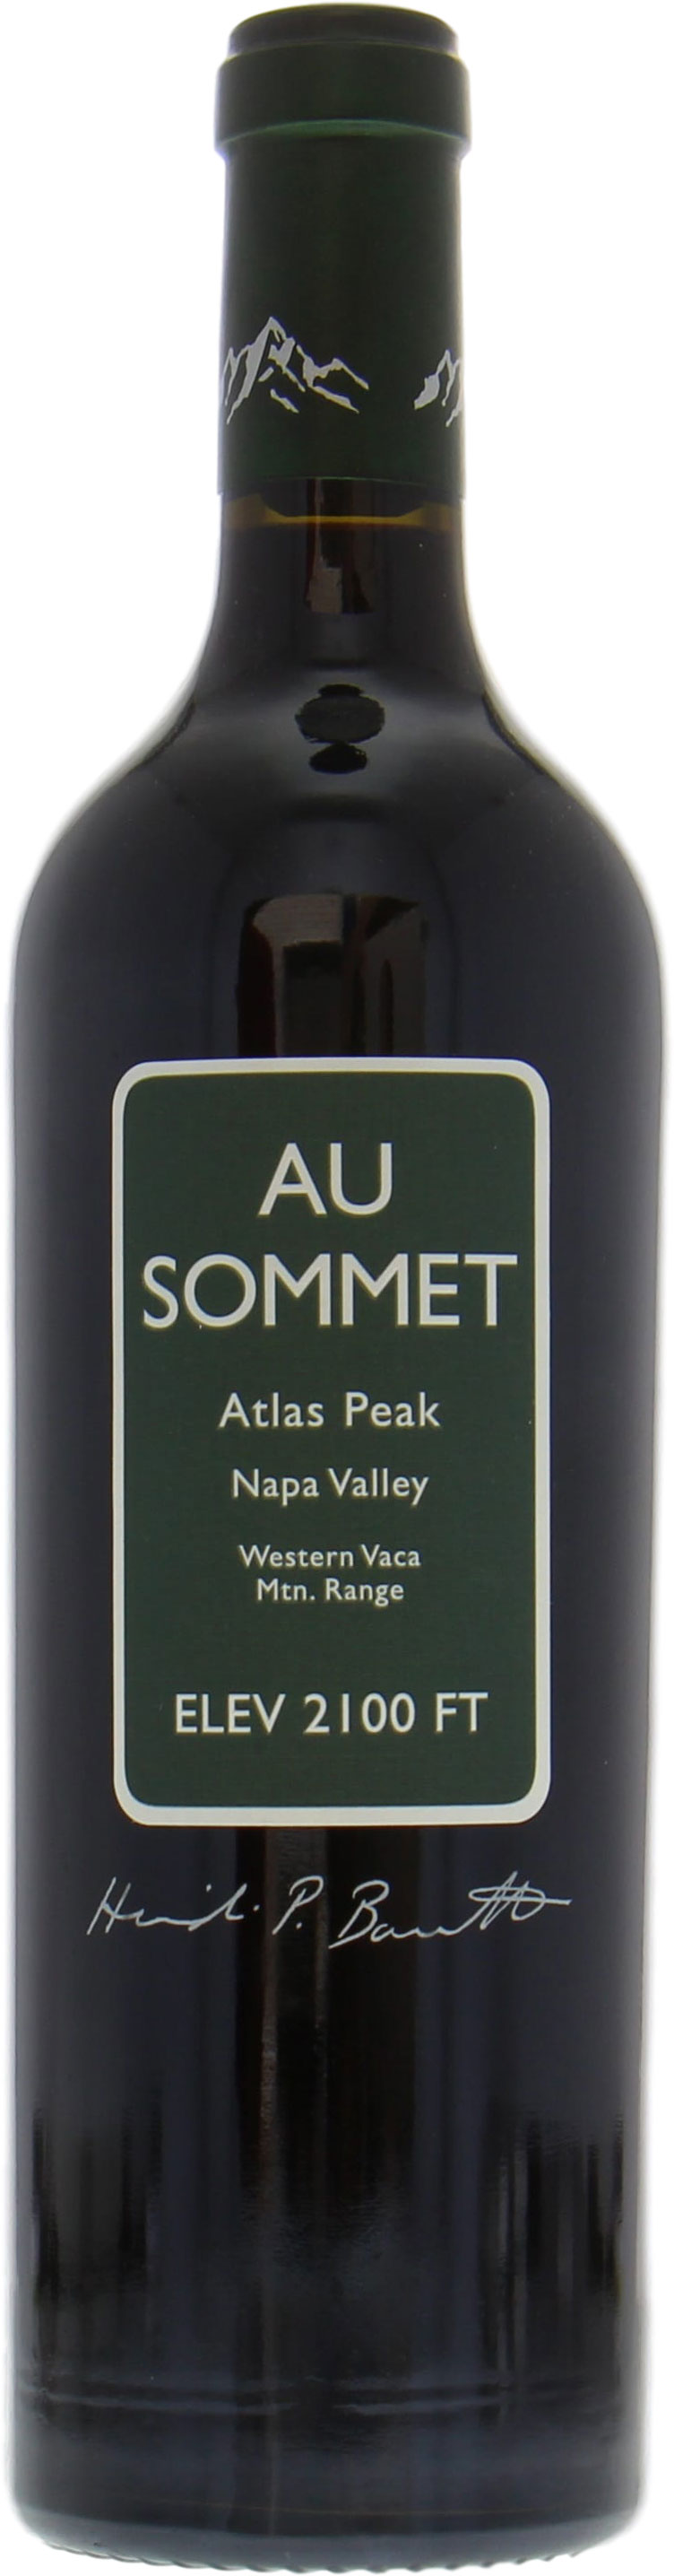 Au vin. Au sommet Atlas Peak Napa Valley 2016.